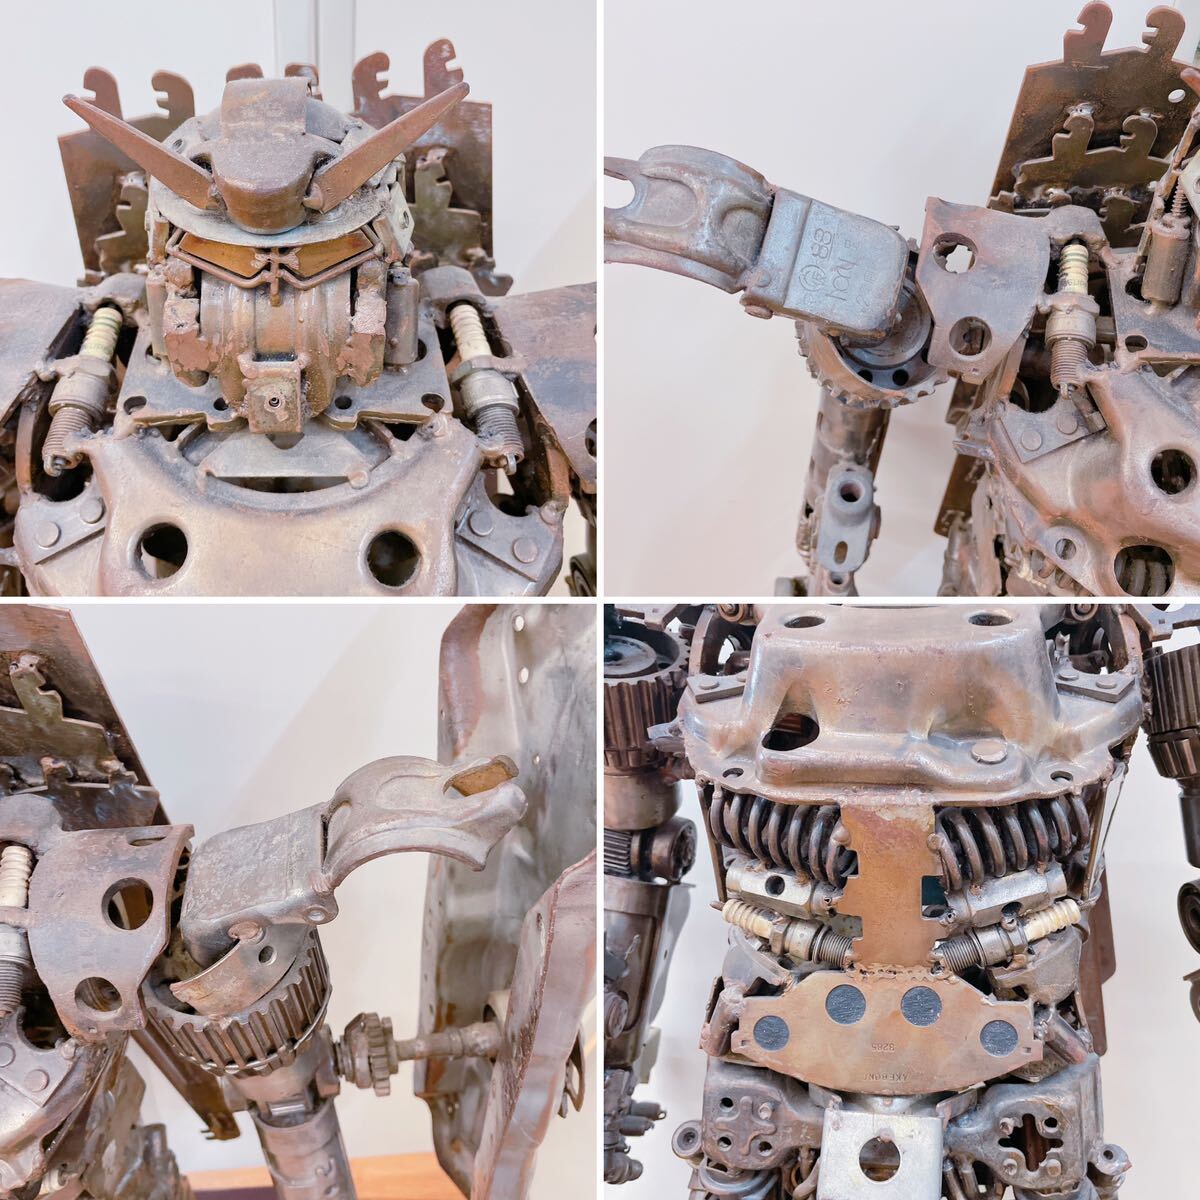 4Ｅ021 ガンダム風ロボット 廃材アート メタルアート バイクパーツ 鉄材 の画像3